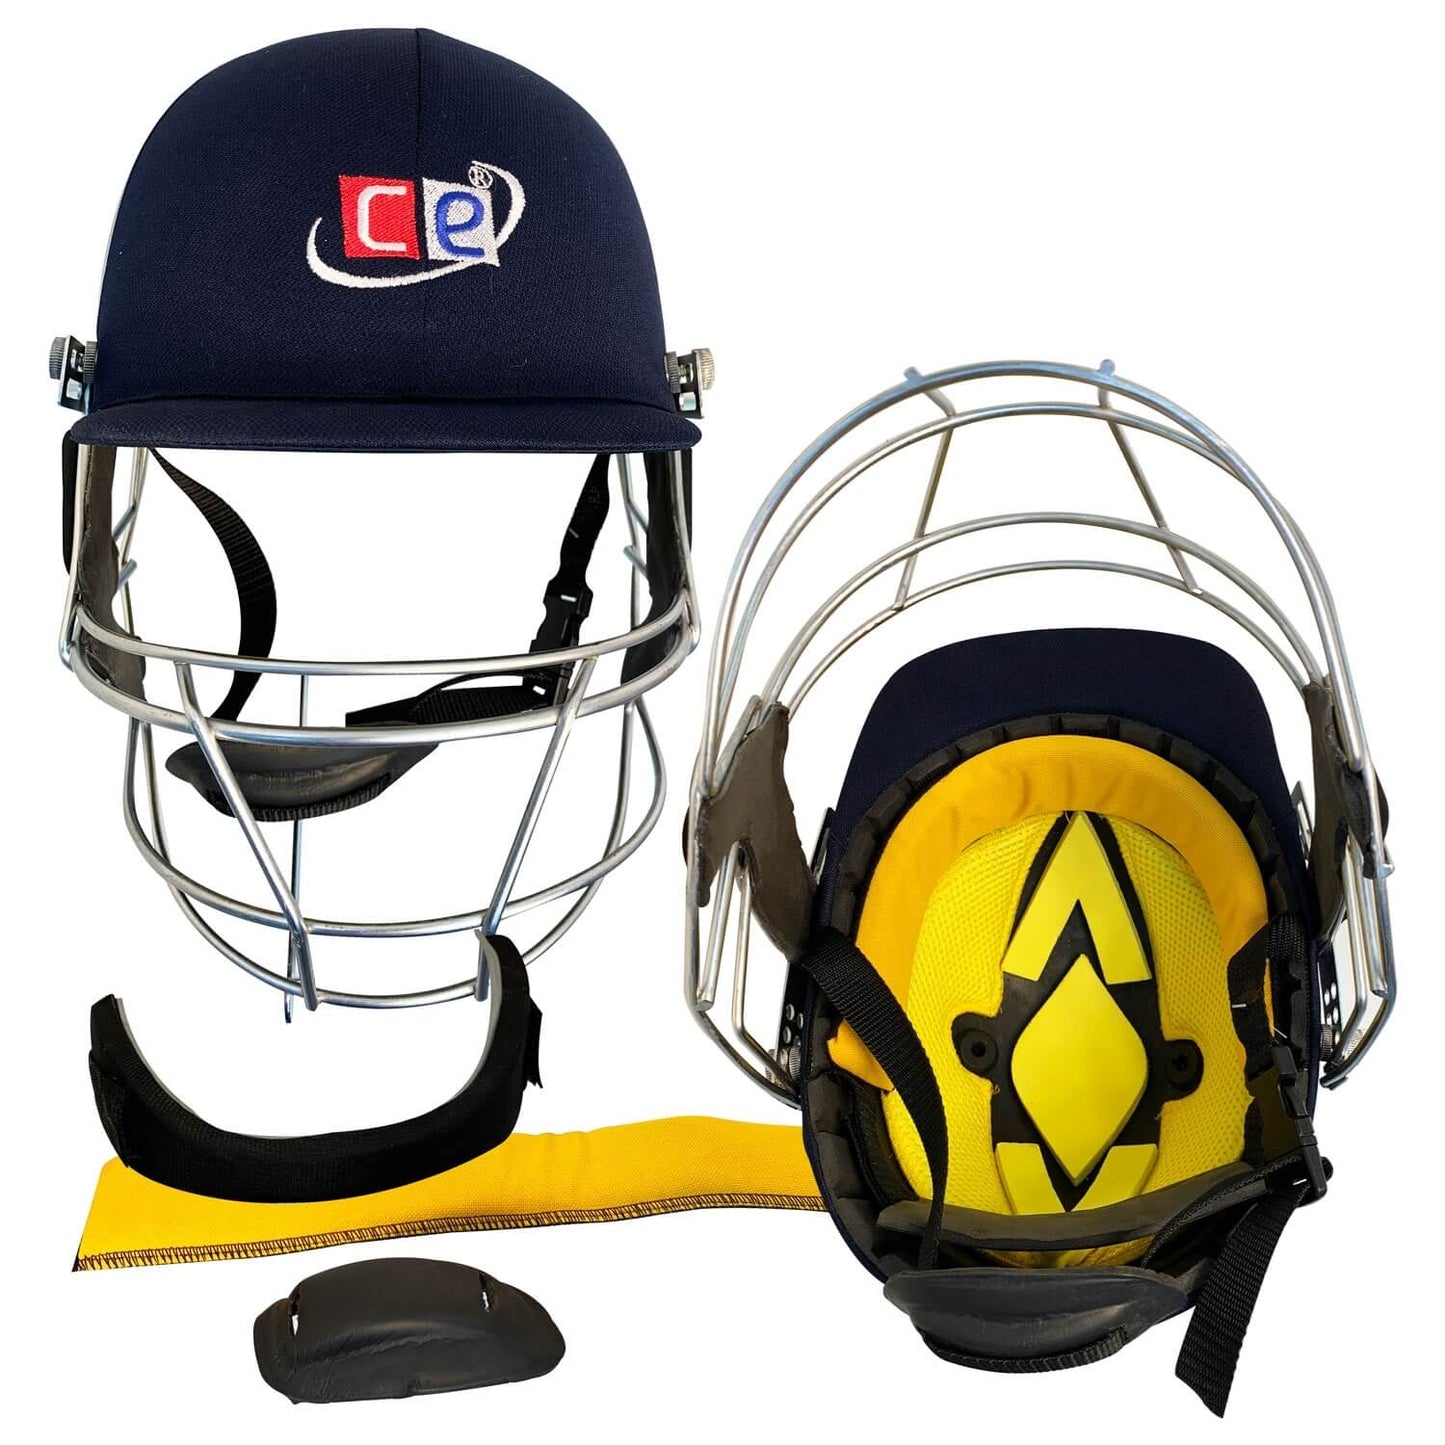 Cricket Helmet Revolution For Head & Face Protection Navy Blue